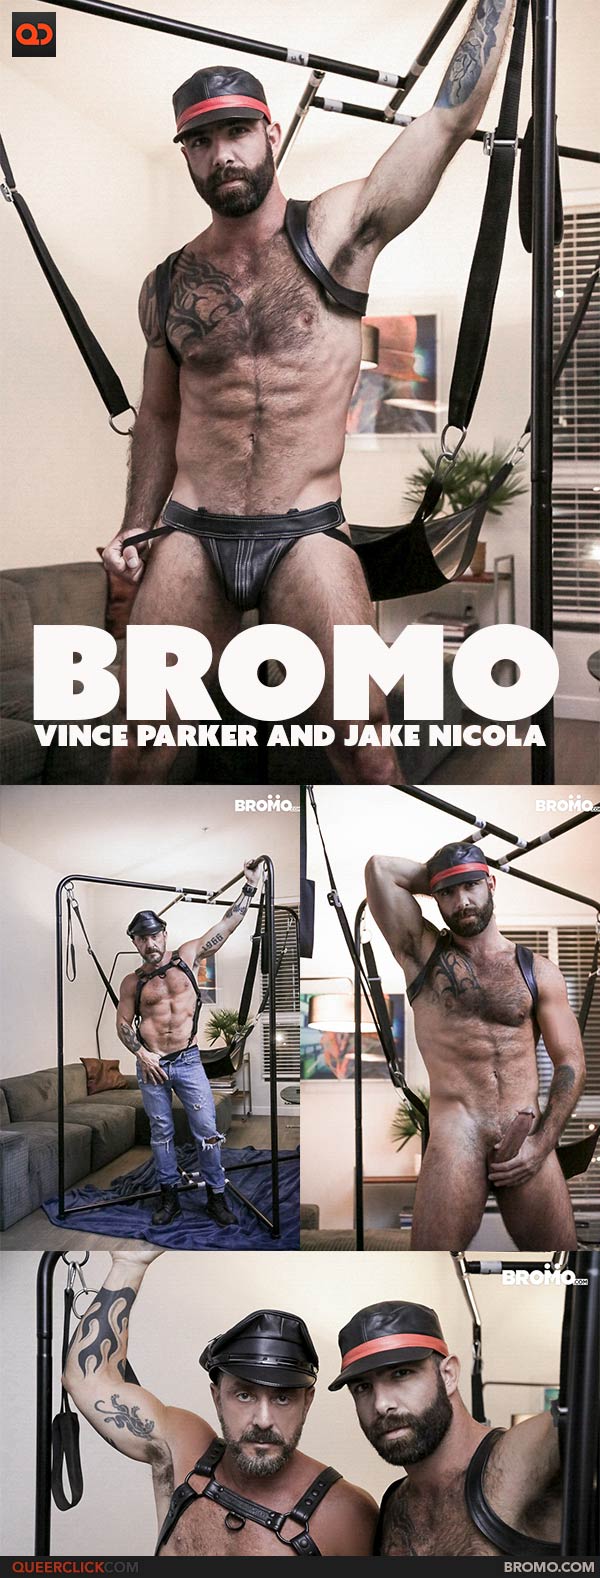 Bromo: Vince Parker and Jake Nicola